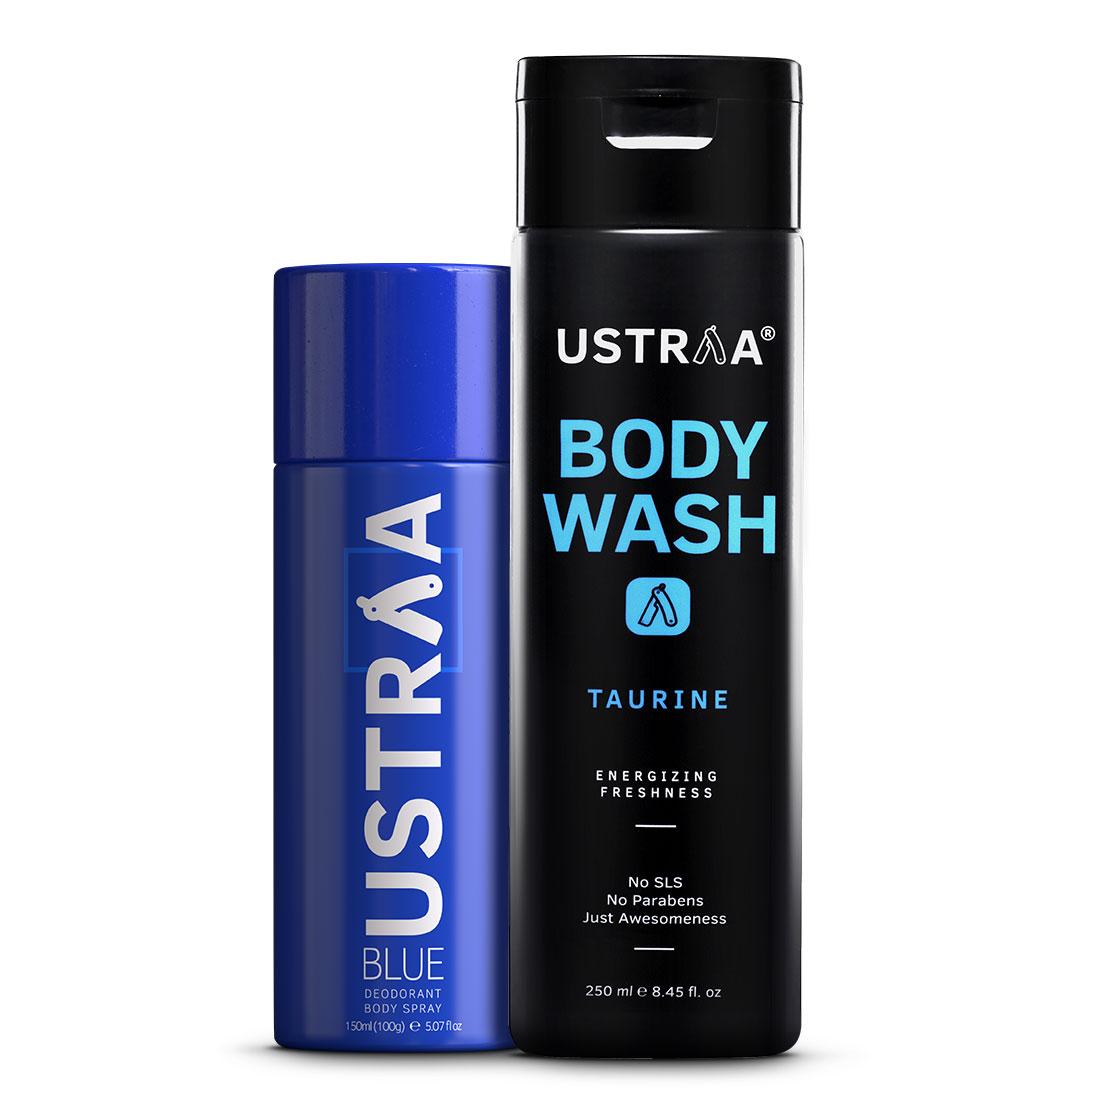 Ustraa Body Wash-Taurine (200ml) and Blue Deodorant (150ml) Combo For Men